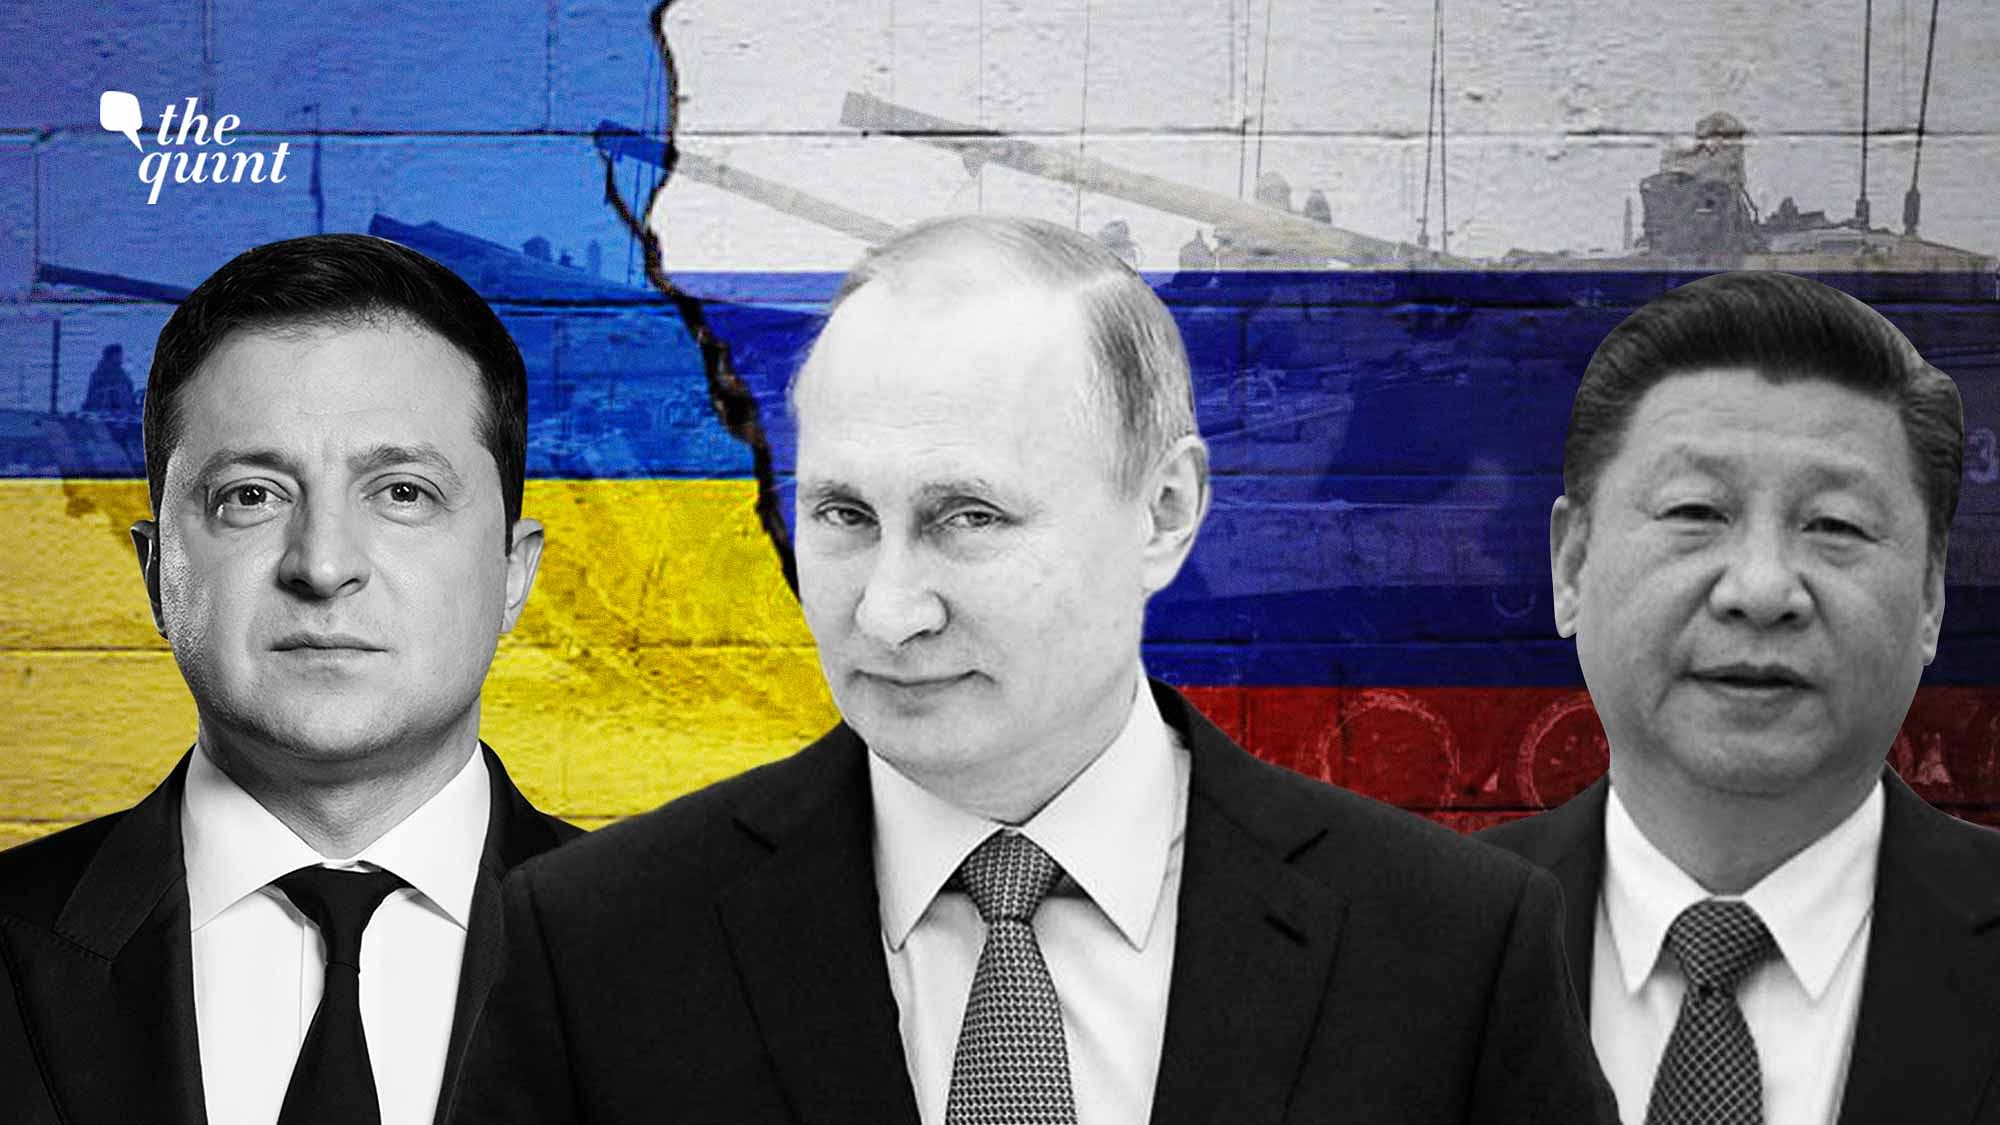 <div class="paragraphs"><p>Expert explains why China's stance on Russia-Ukraine crisis is precarious.</p></div>